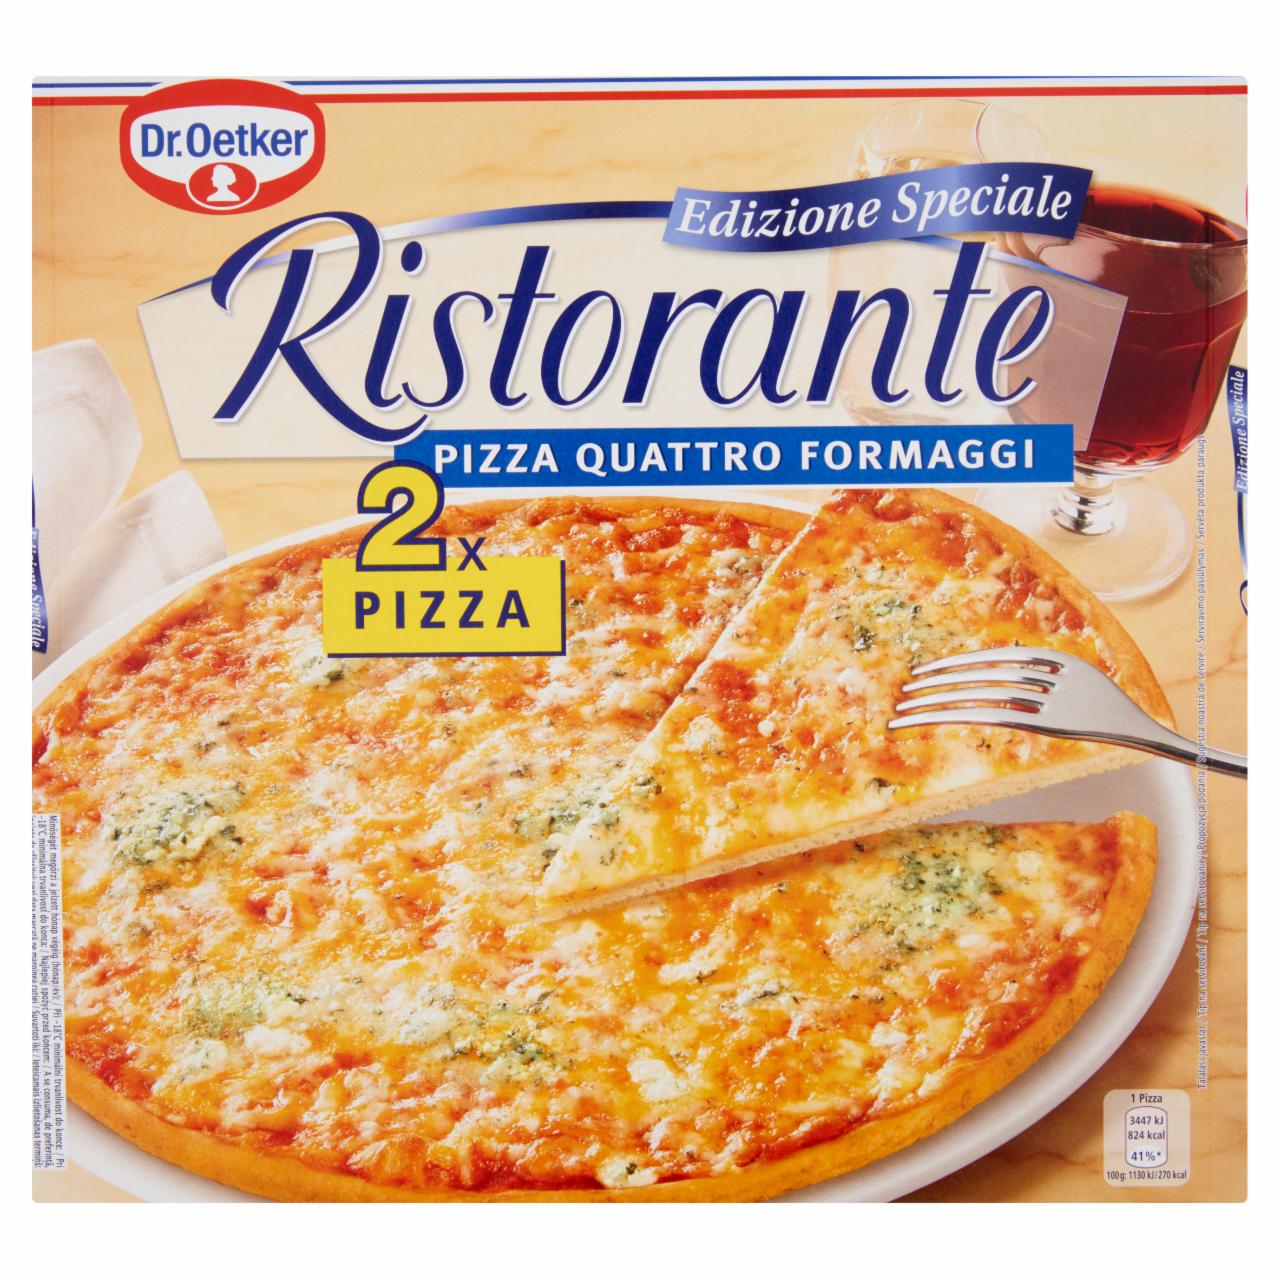 Képek - Dr. Oetker Ristorante Pizza Quattro Formaggi gyorsfagyasztott négysajtos pizza 2 db 610 g